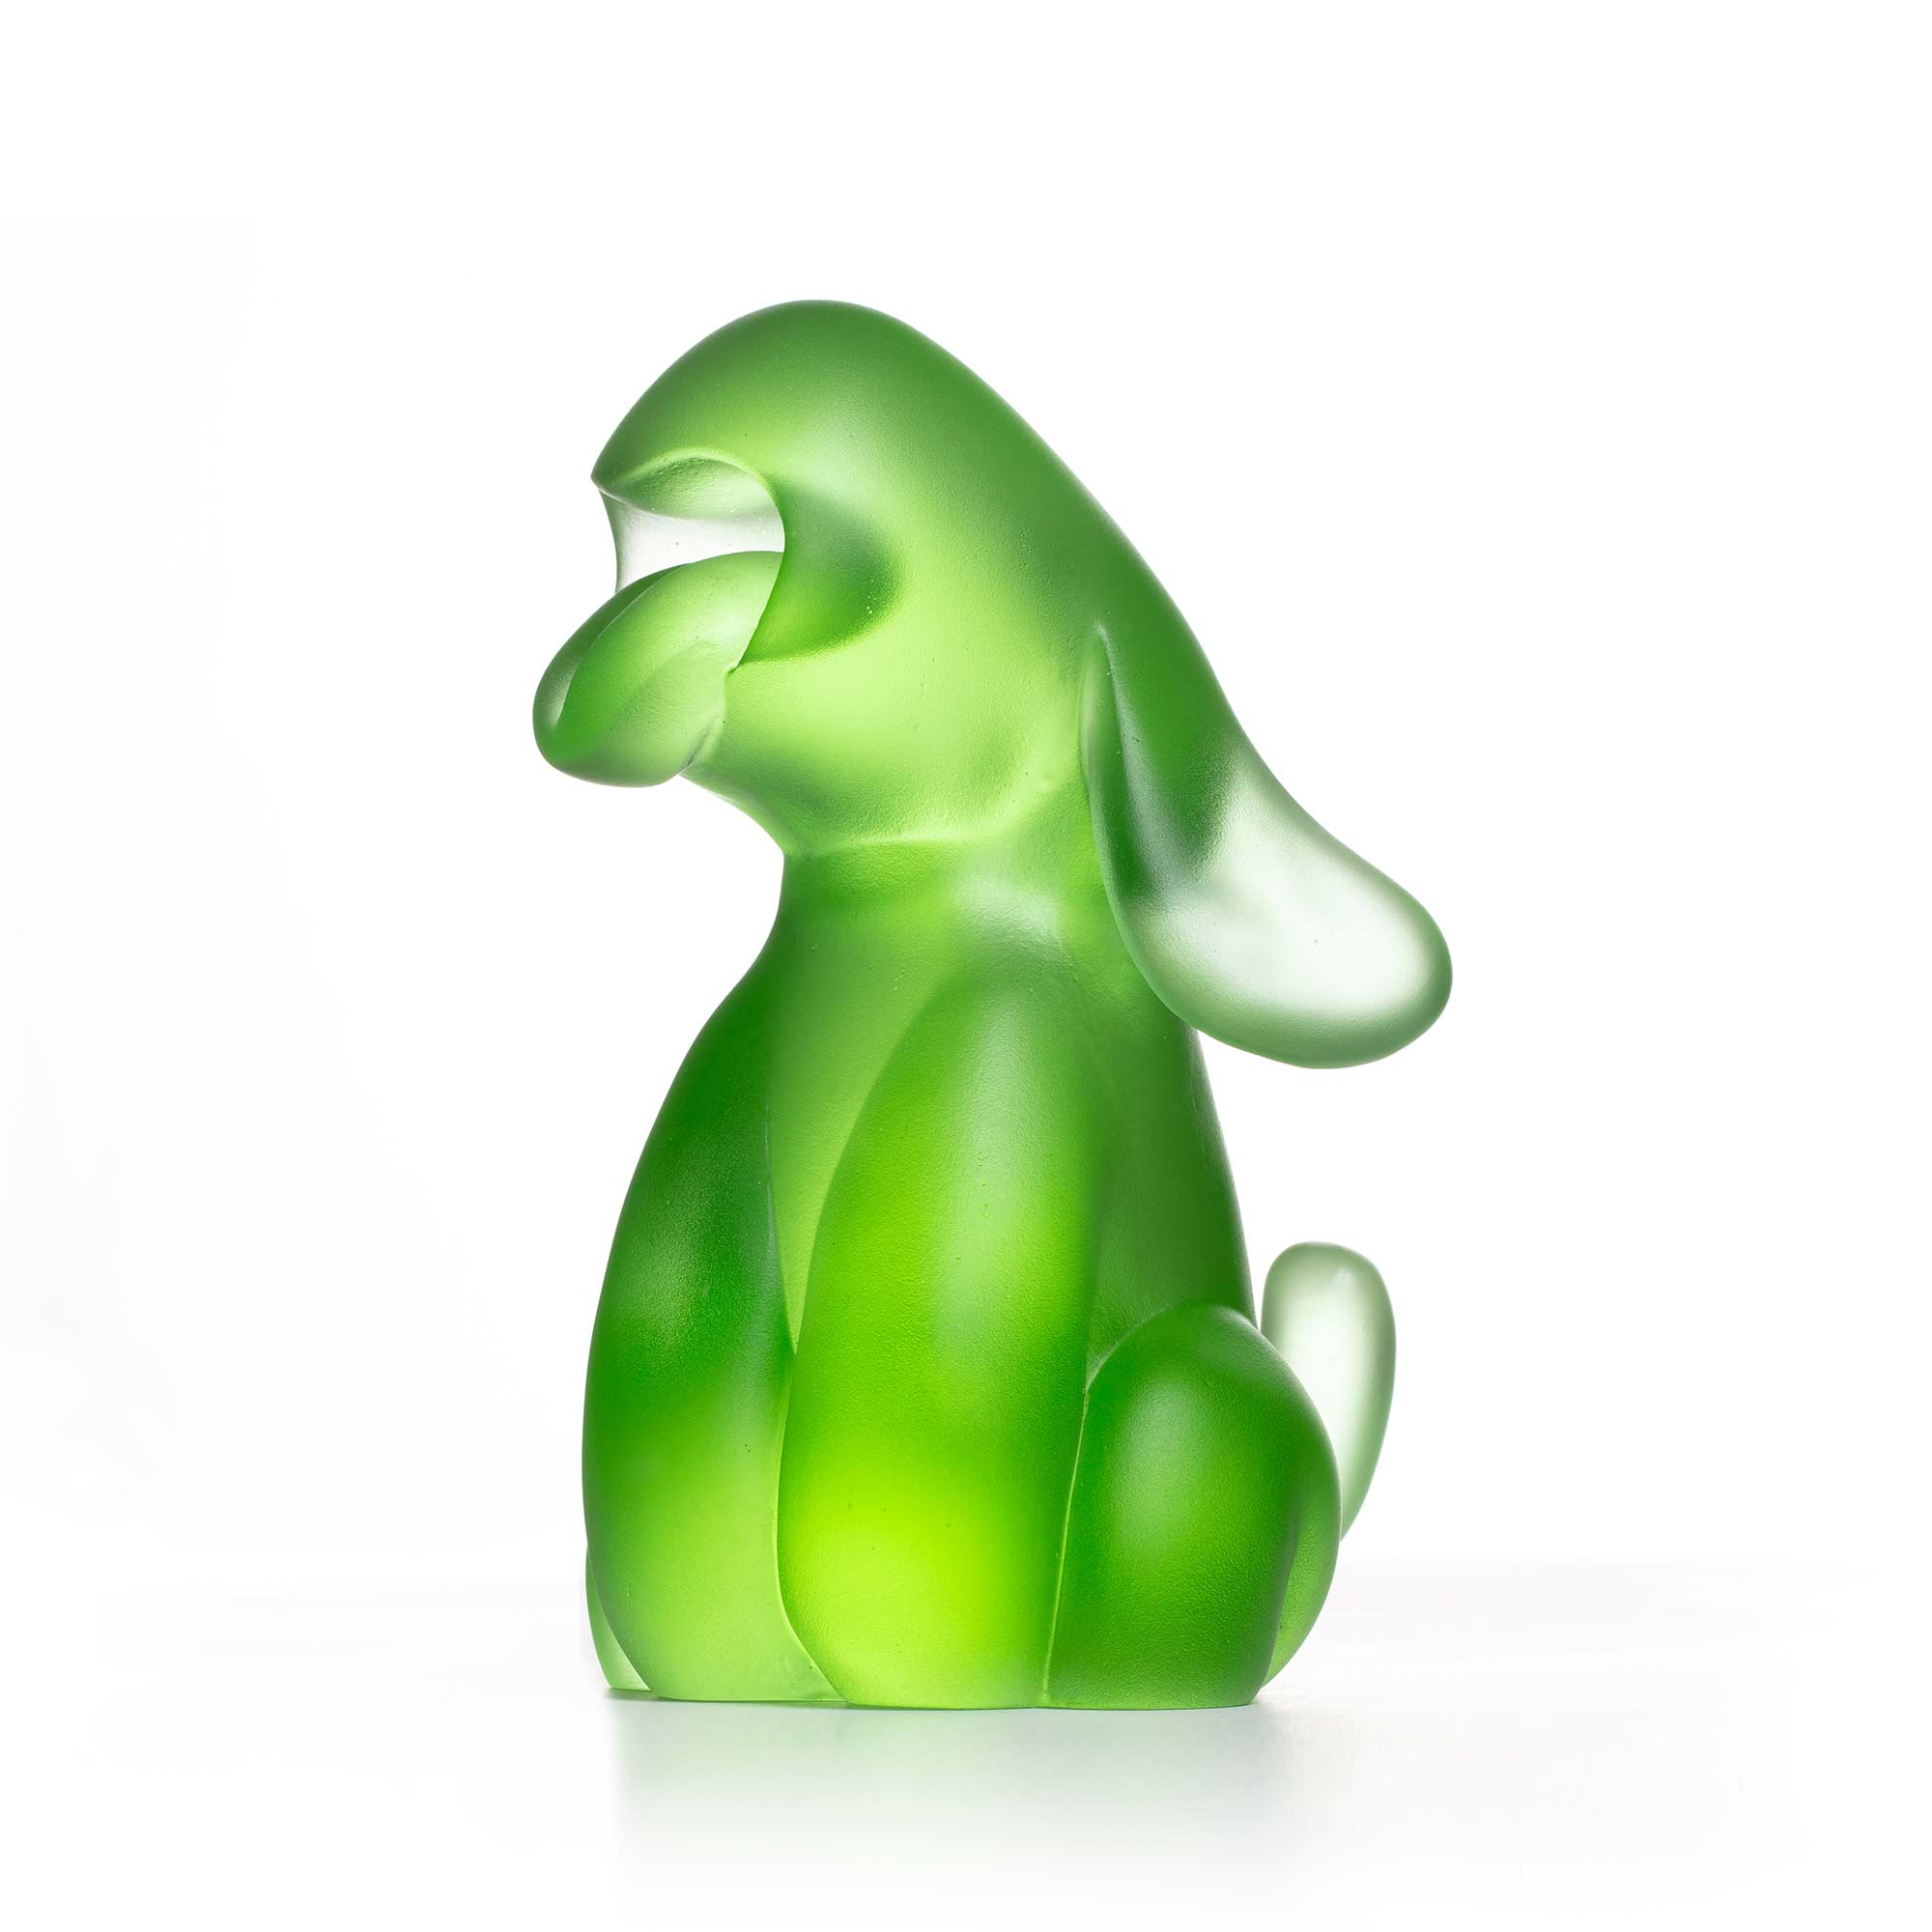 Dog Roar, green crystal sculpture, limited edition by artist Ferdi B Dick, side view